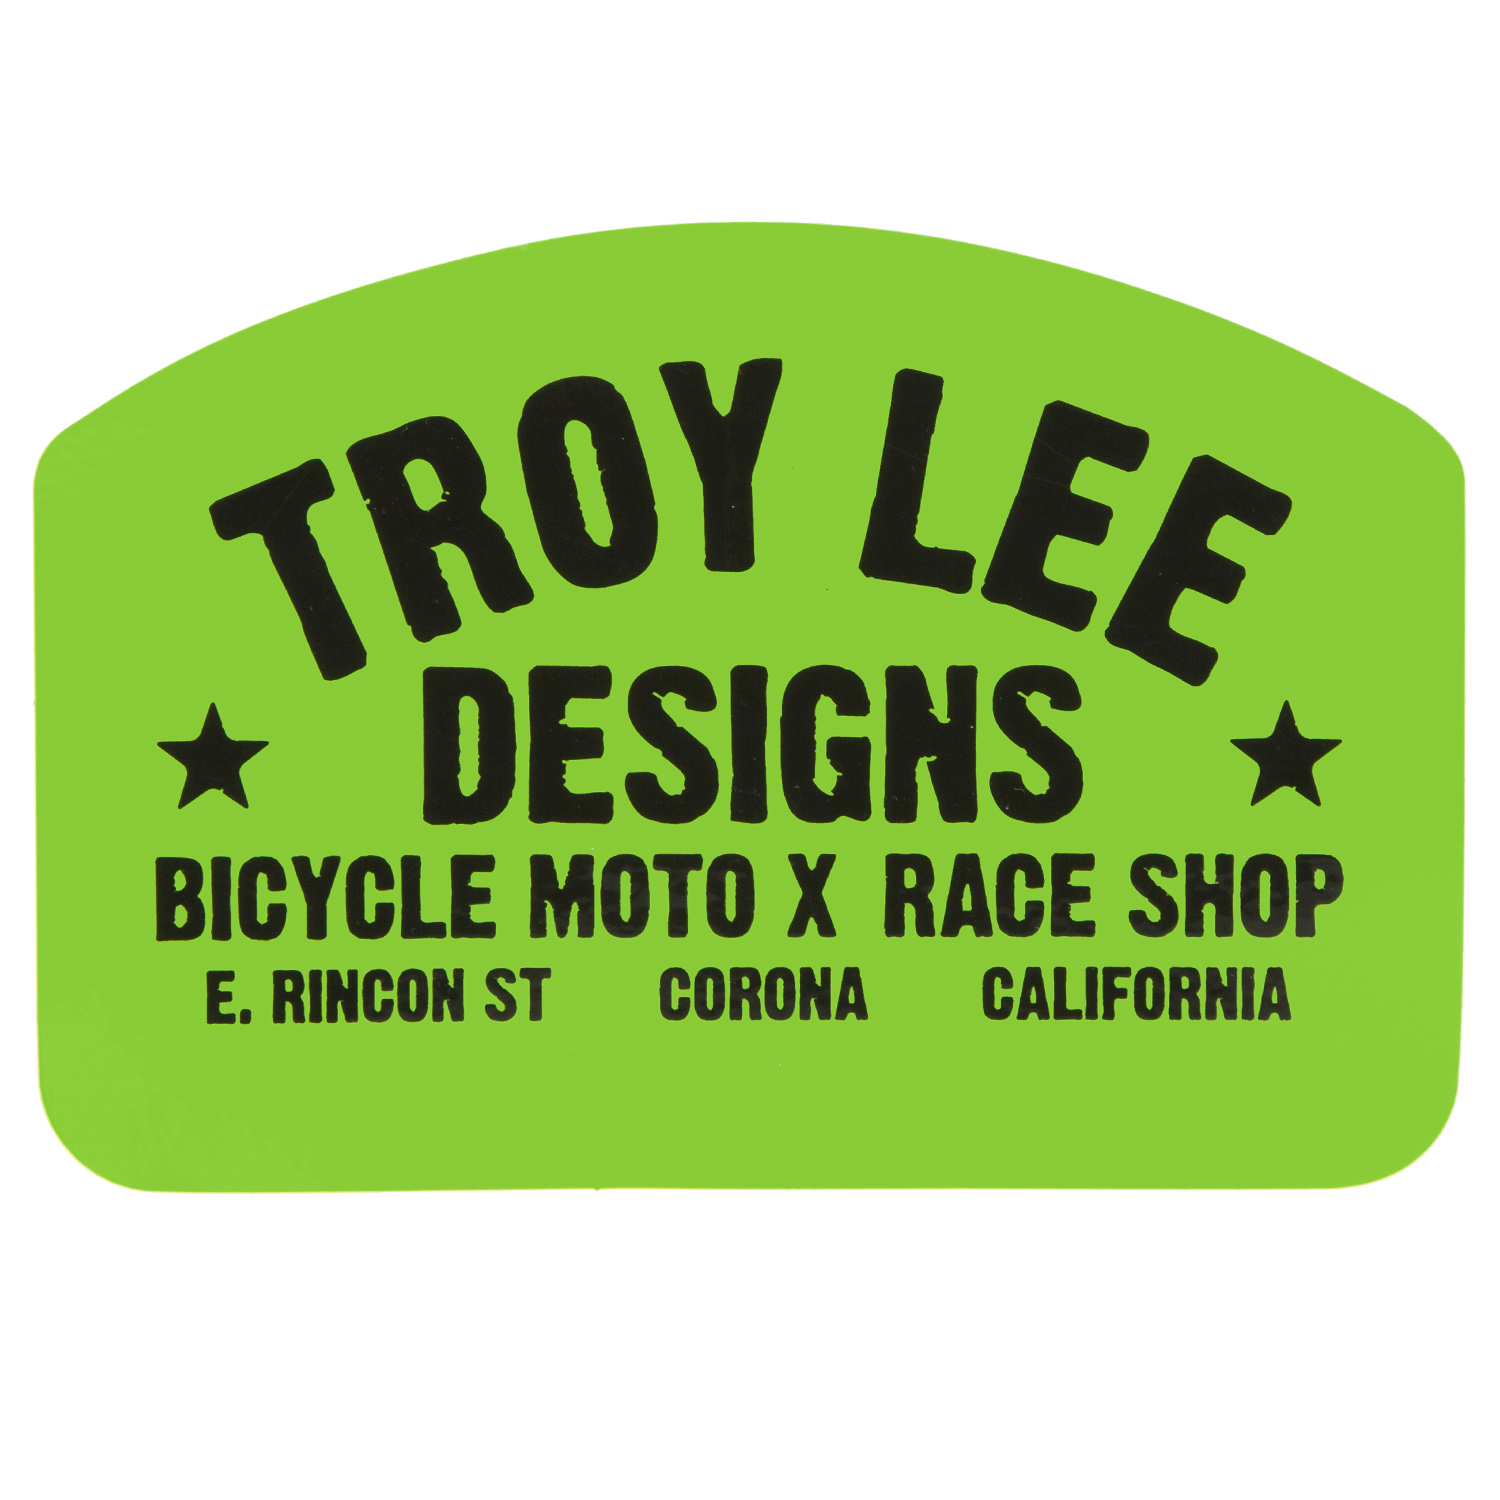 Troy Lee Designs Autocollants Race Shop Green/Black - 3.5 inches